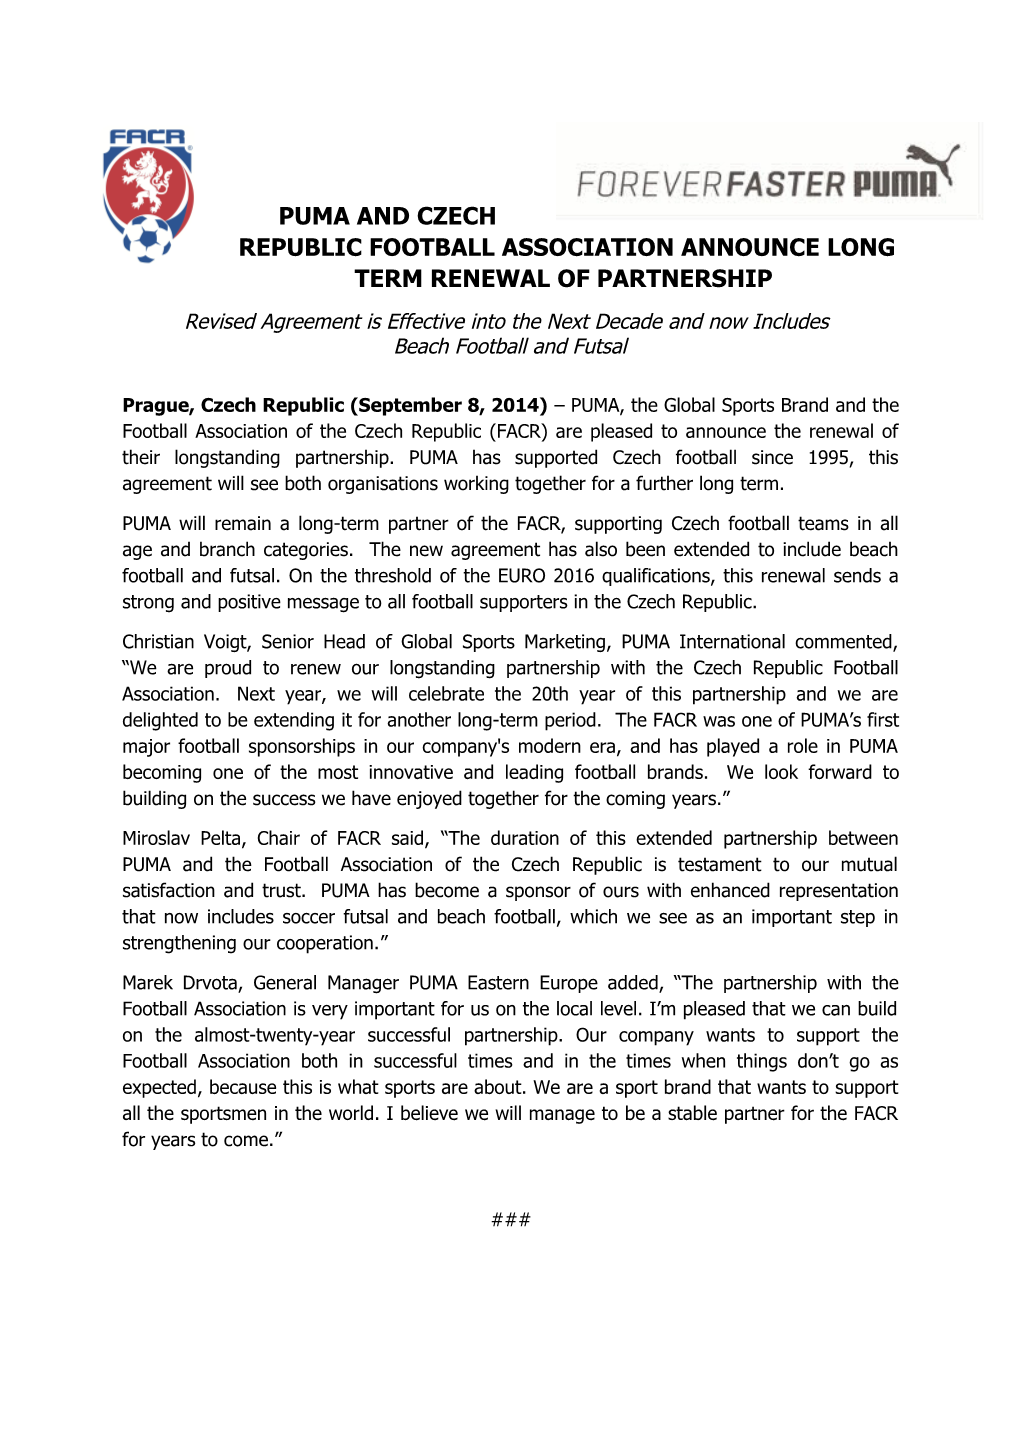 Puma and Czech Republic Football Association Announce Long Term Renewal of Partnership